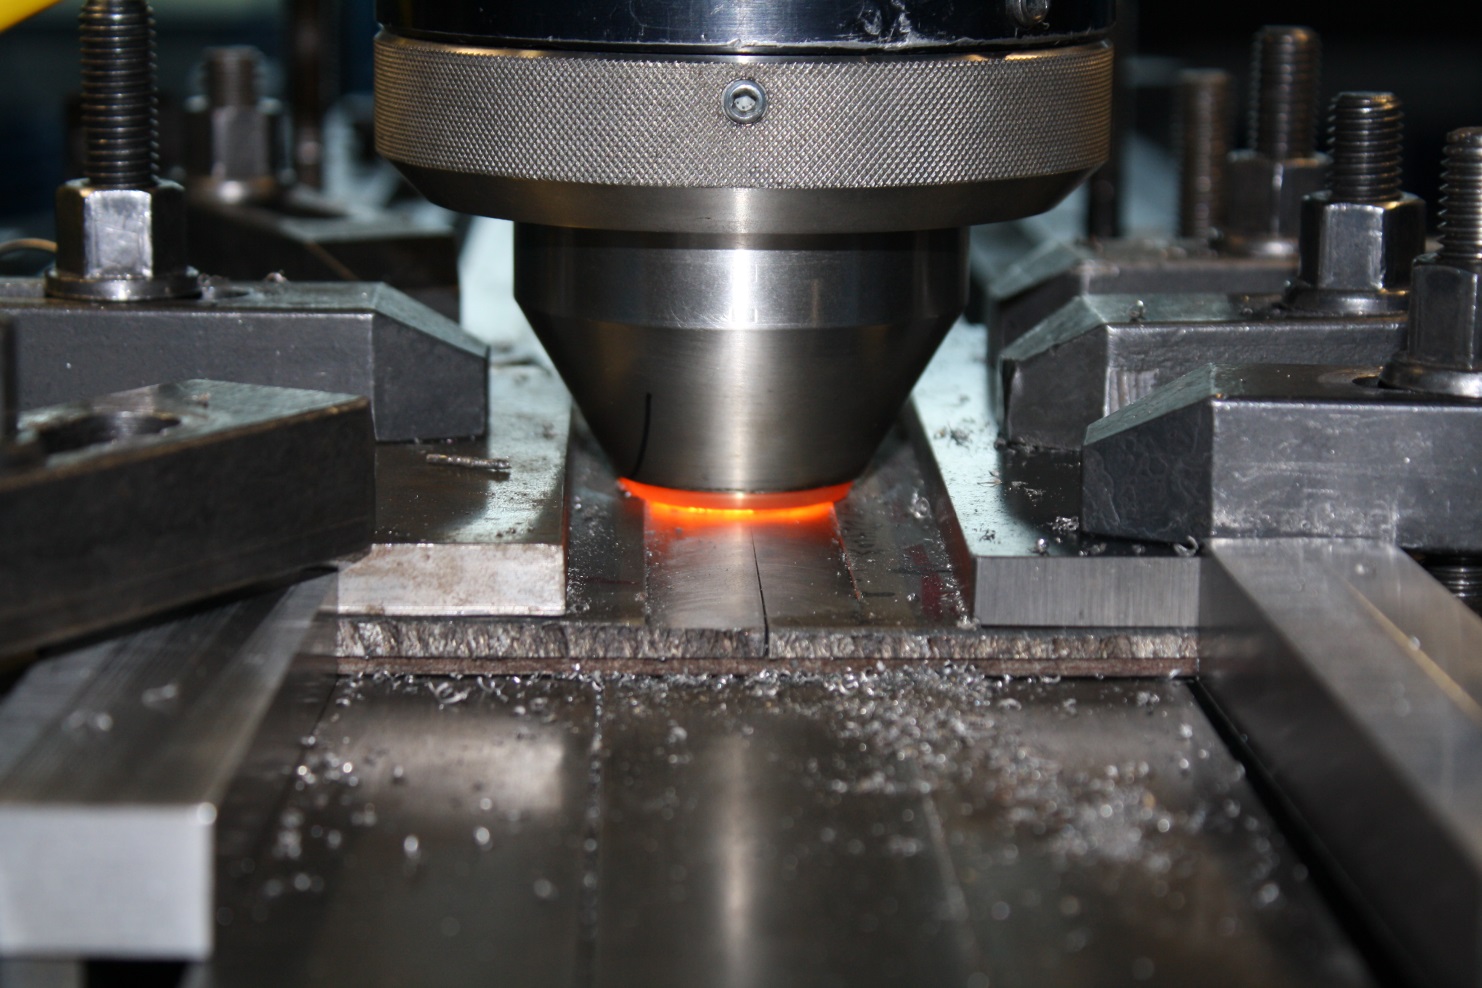 Friction stir welding in progress on two plates of MA956 ODS steel